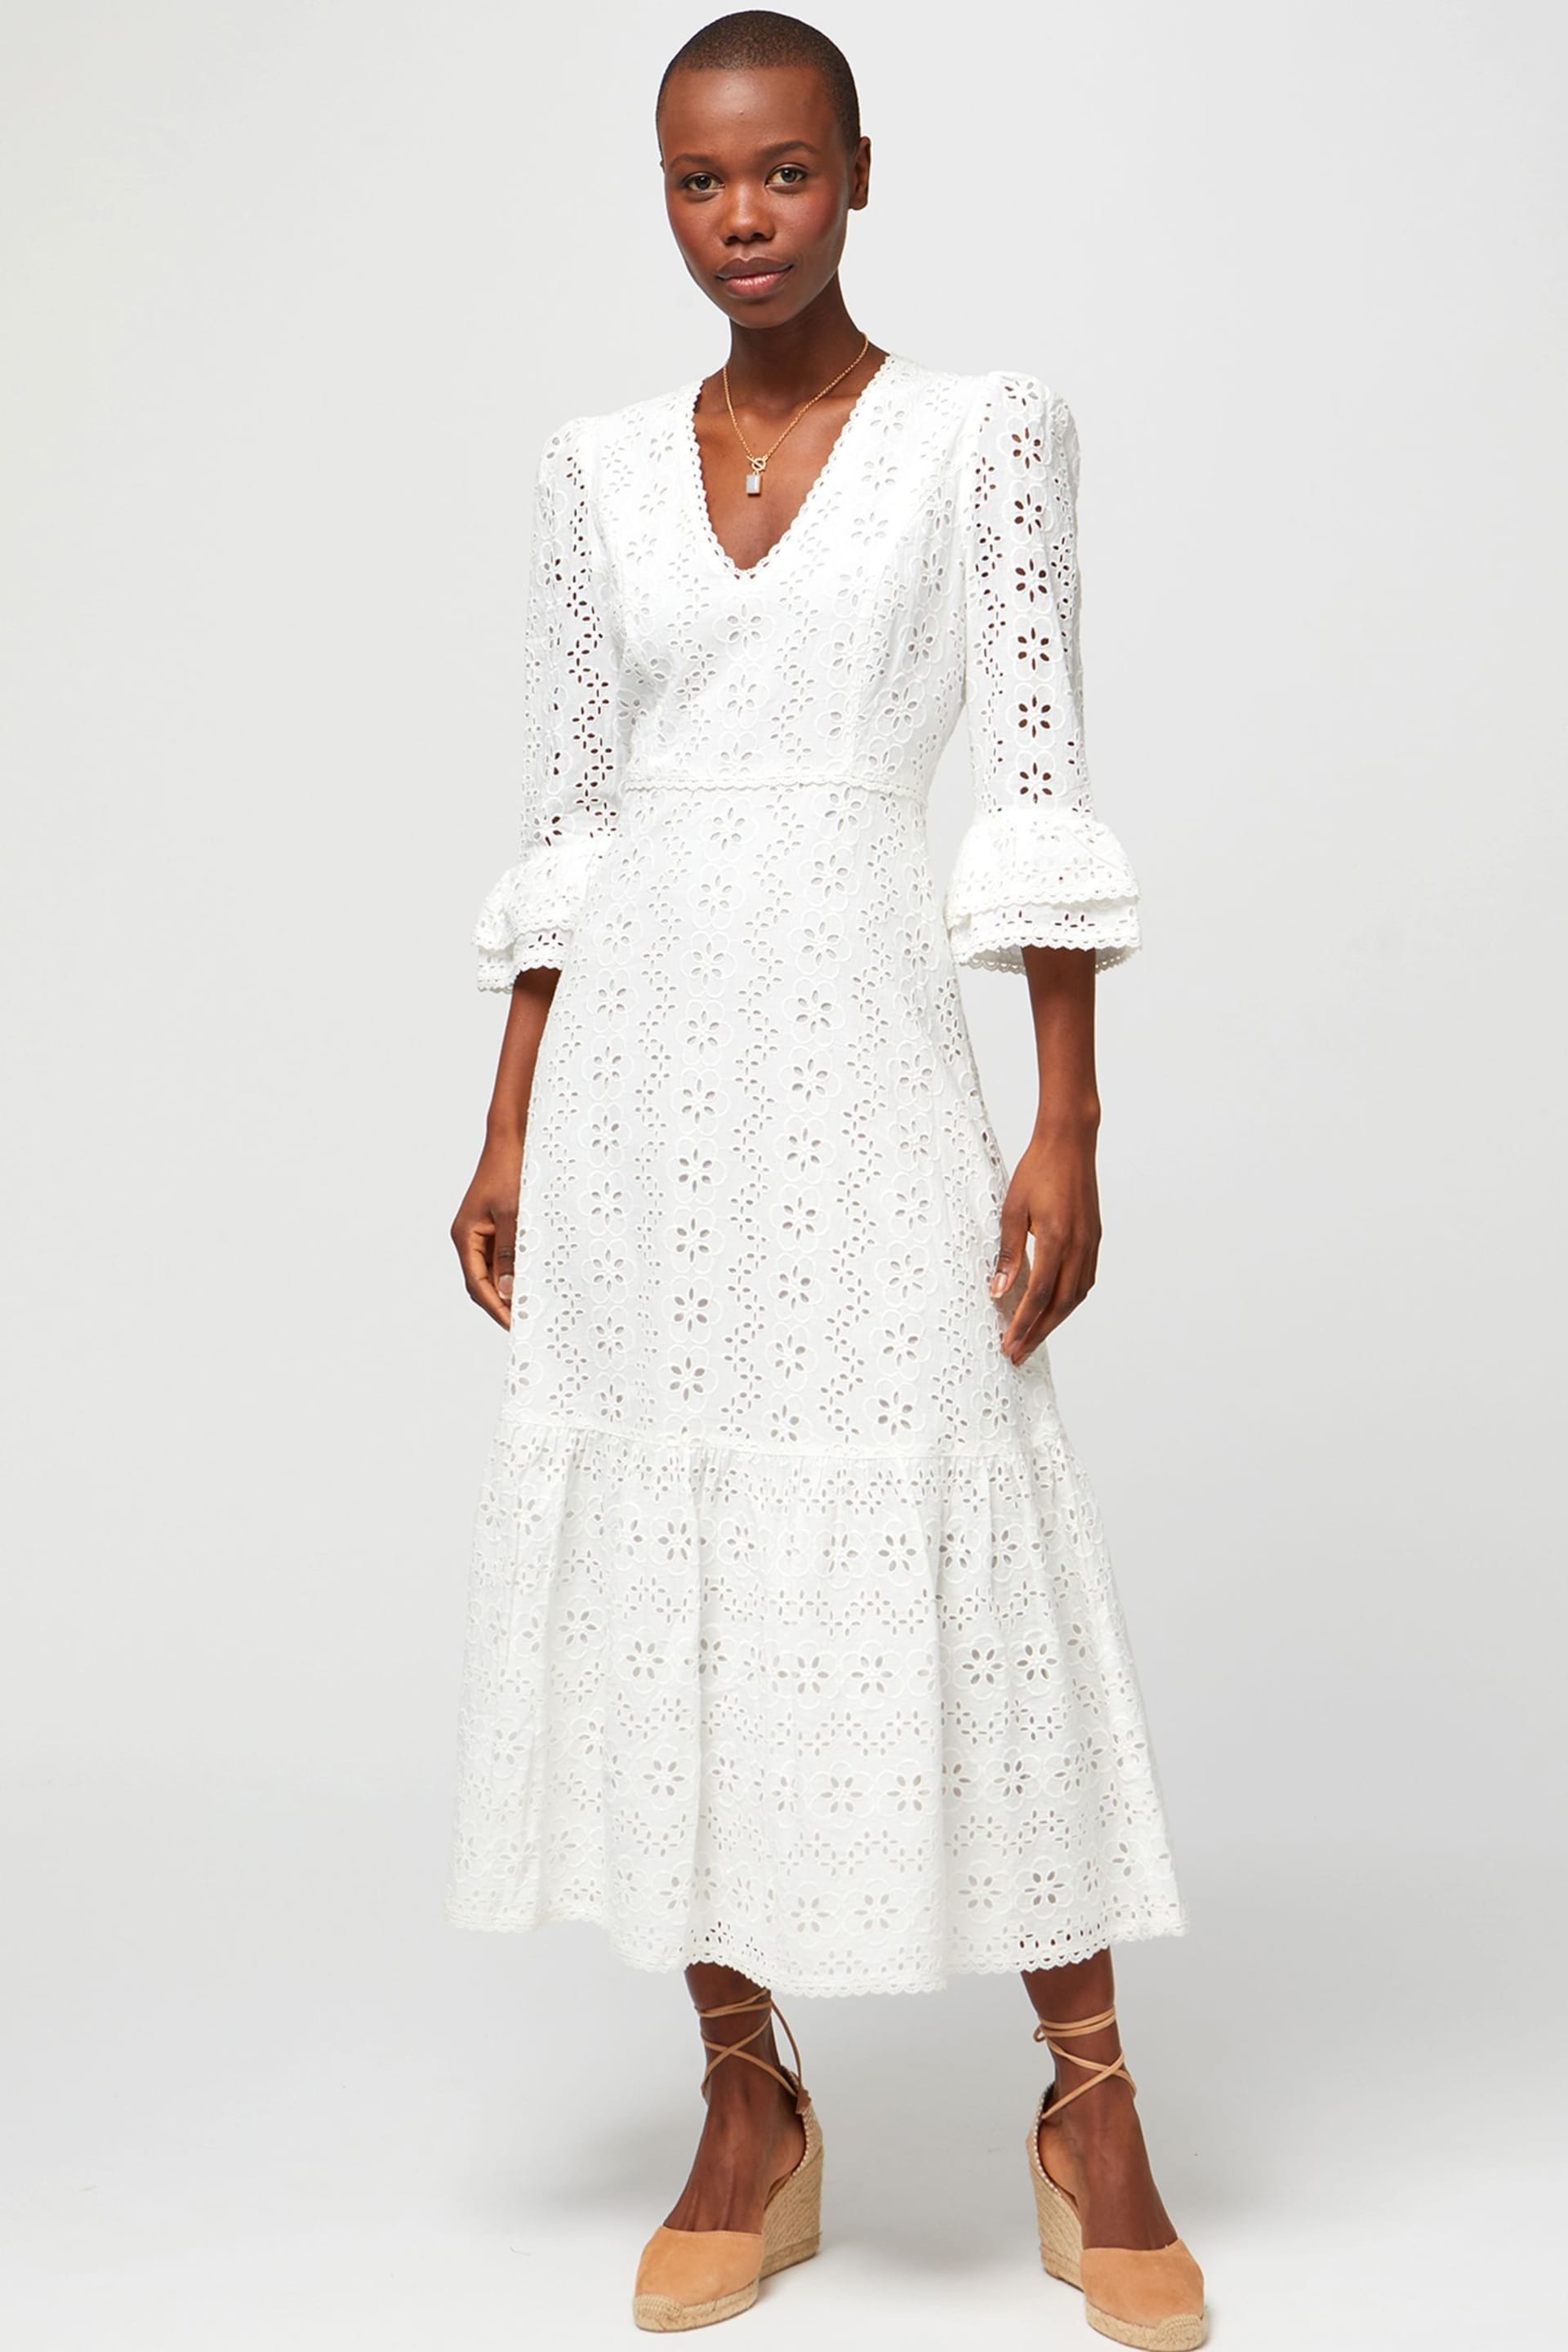 Aspiga Victoria Broderie White Dress - Image 5 of 8